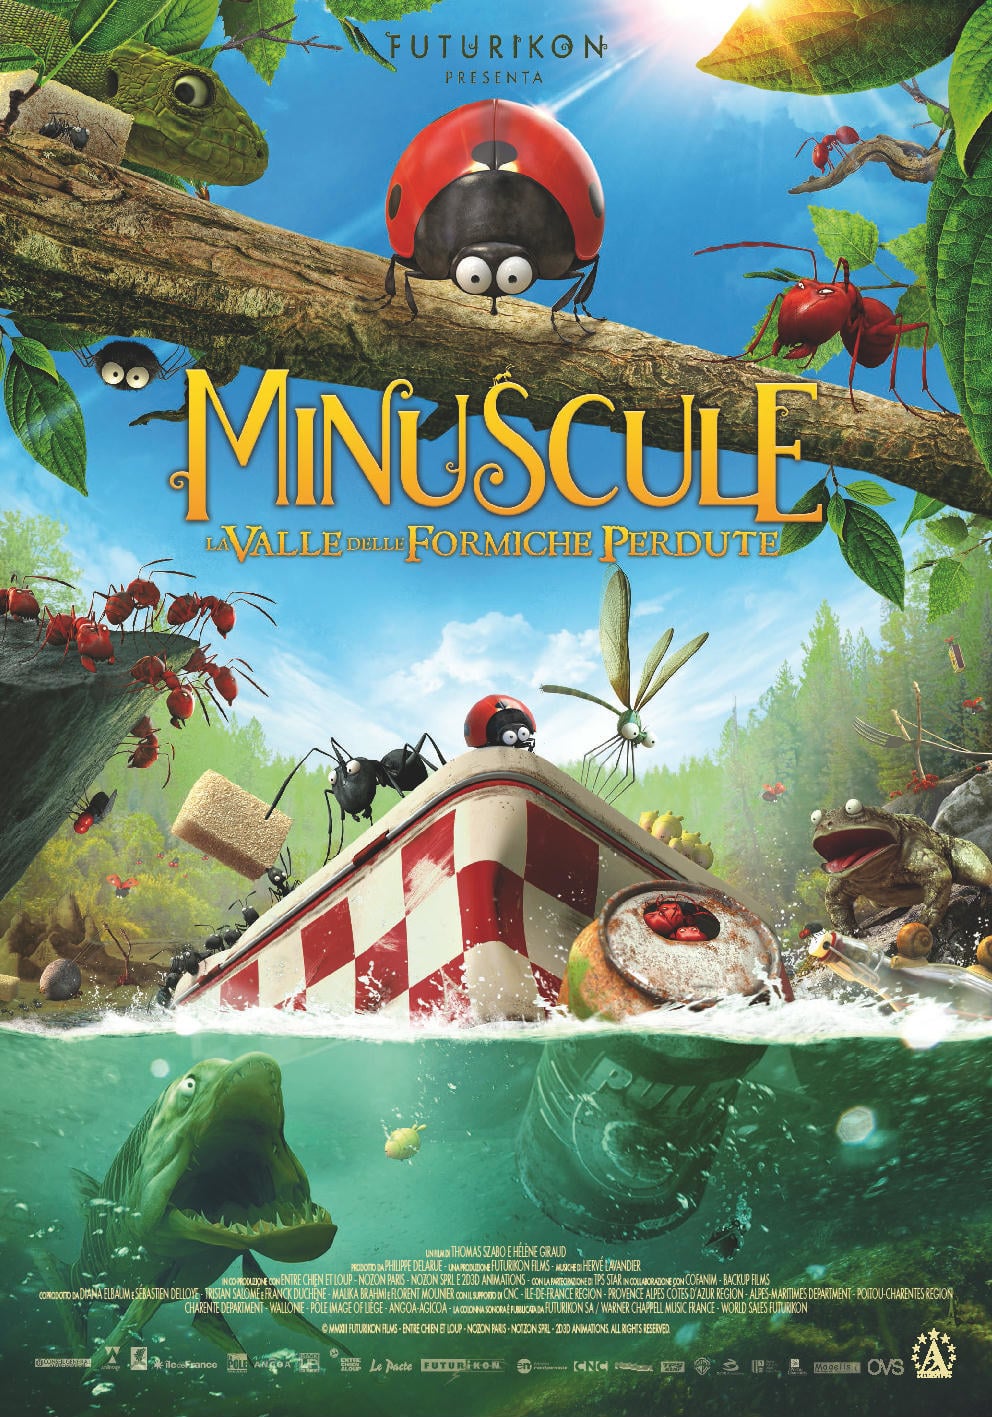 Poster for the movie "Minuscule - La valle delle formiche perdute"